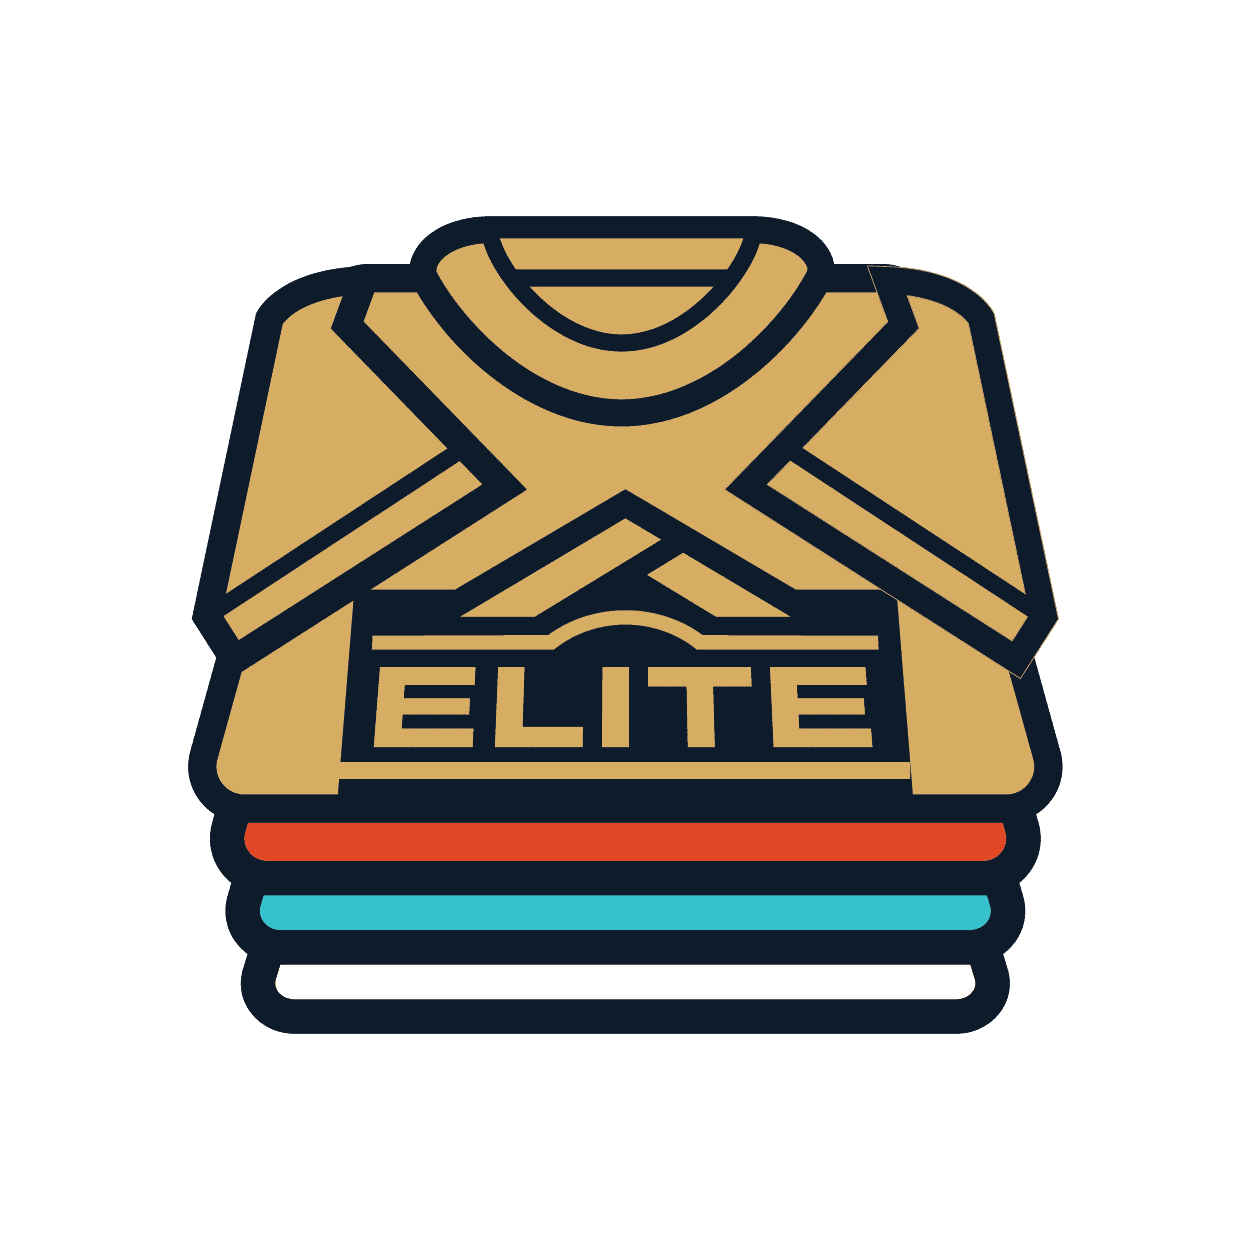 Proofs-Elite Shirt Co